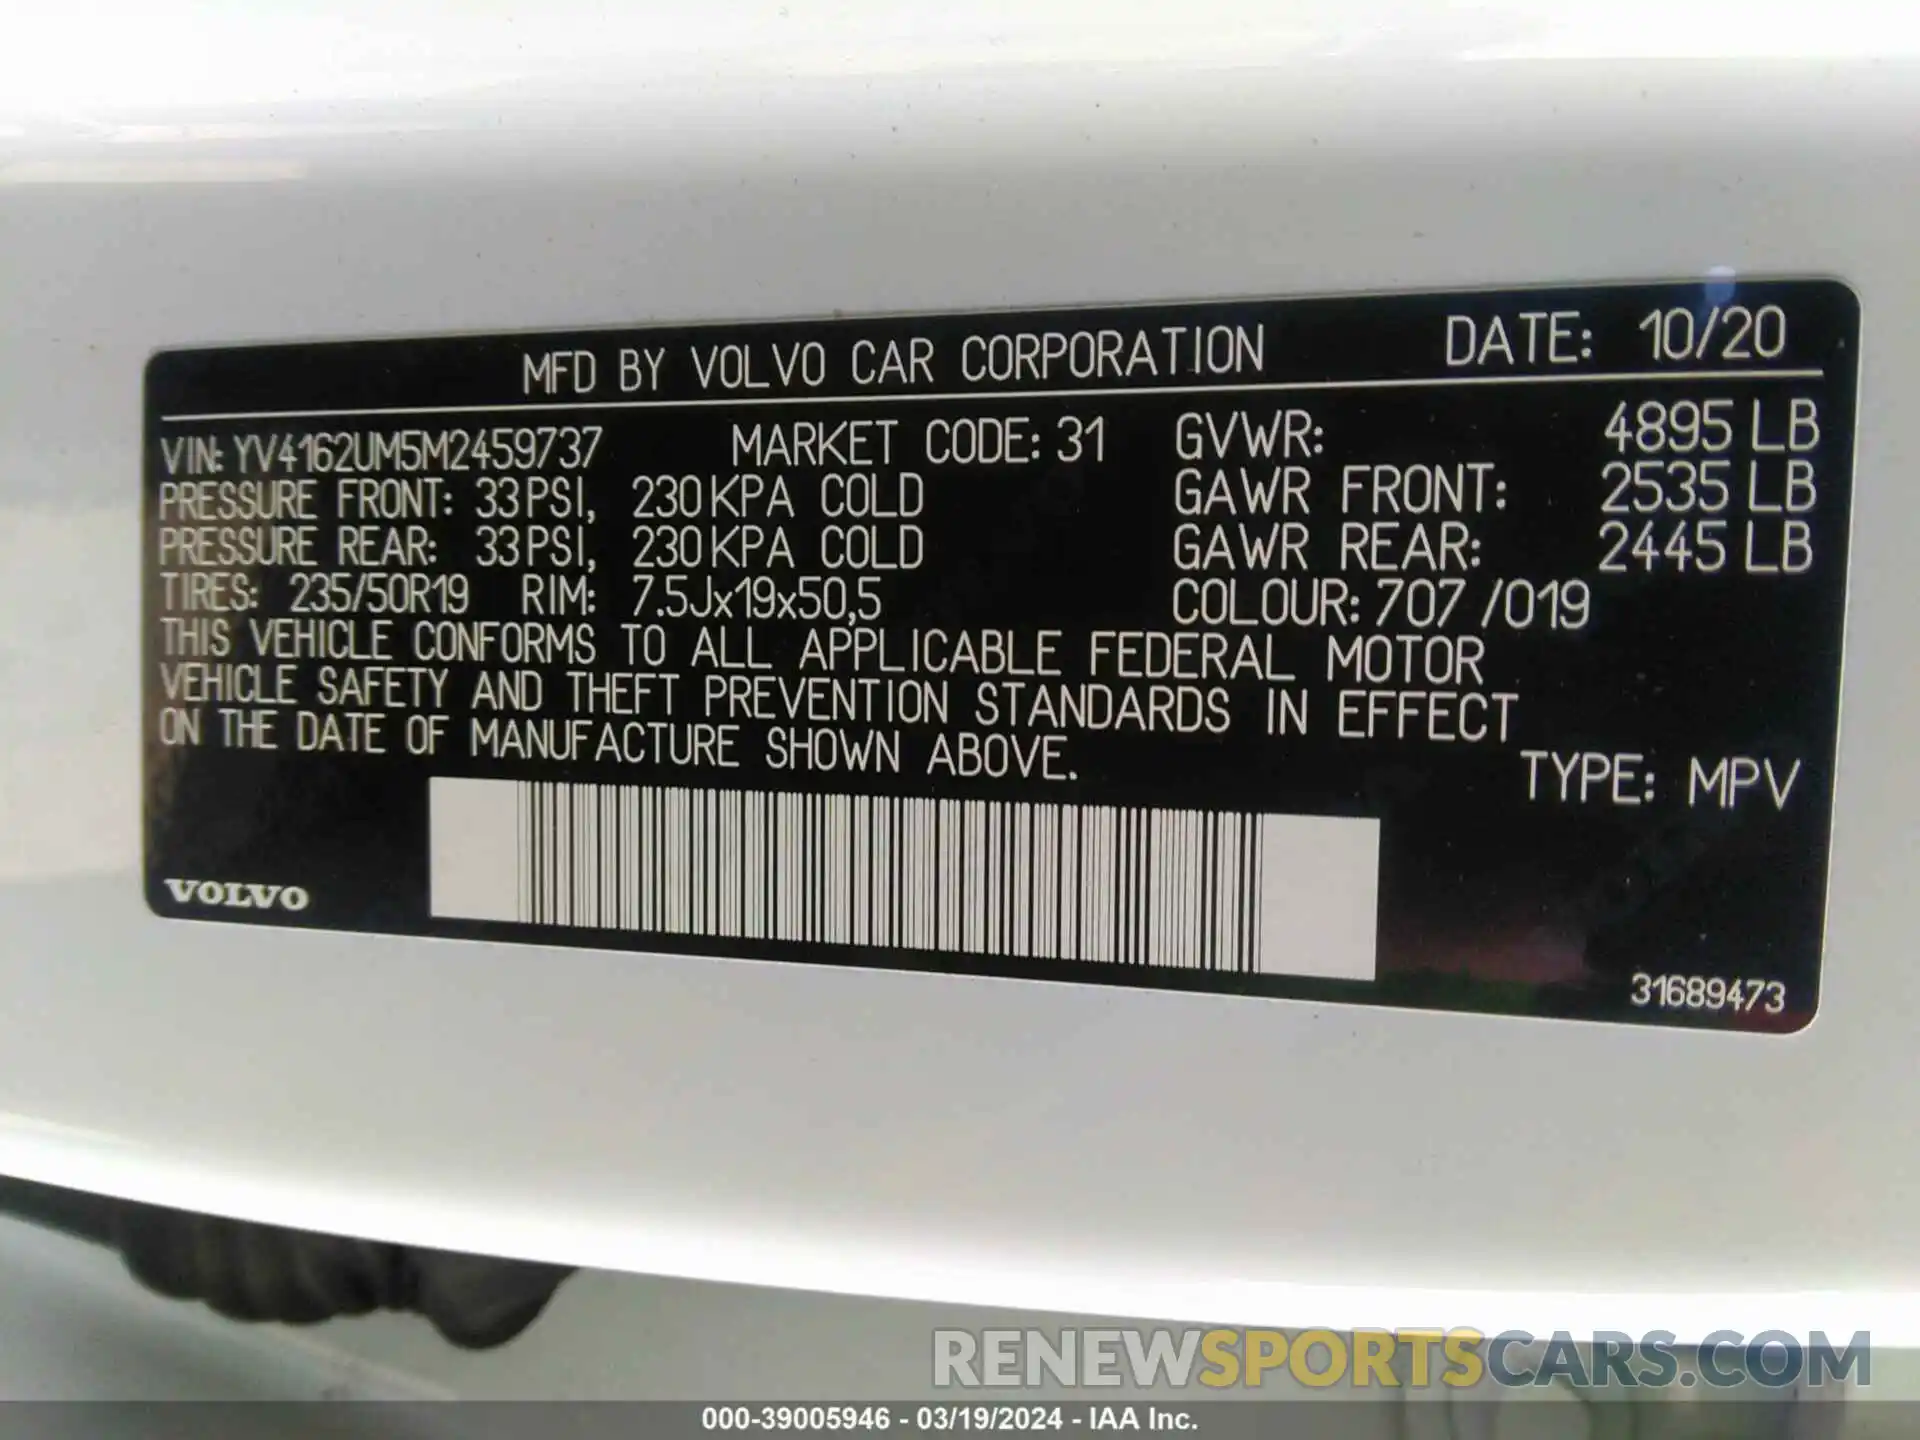 9 Photograph of a damaged car YV4162UM5M2459737 VOLVO XC40 2021